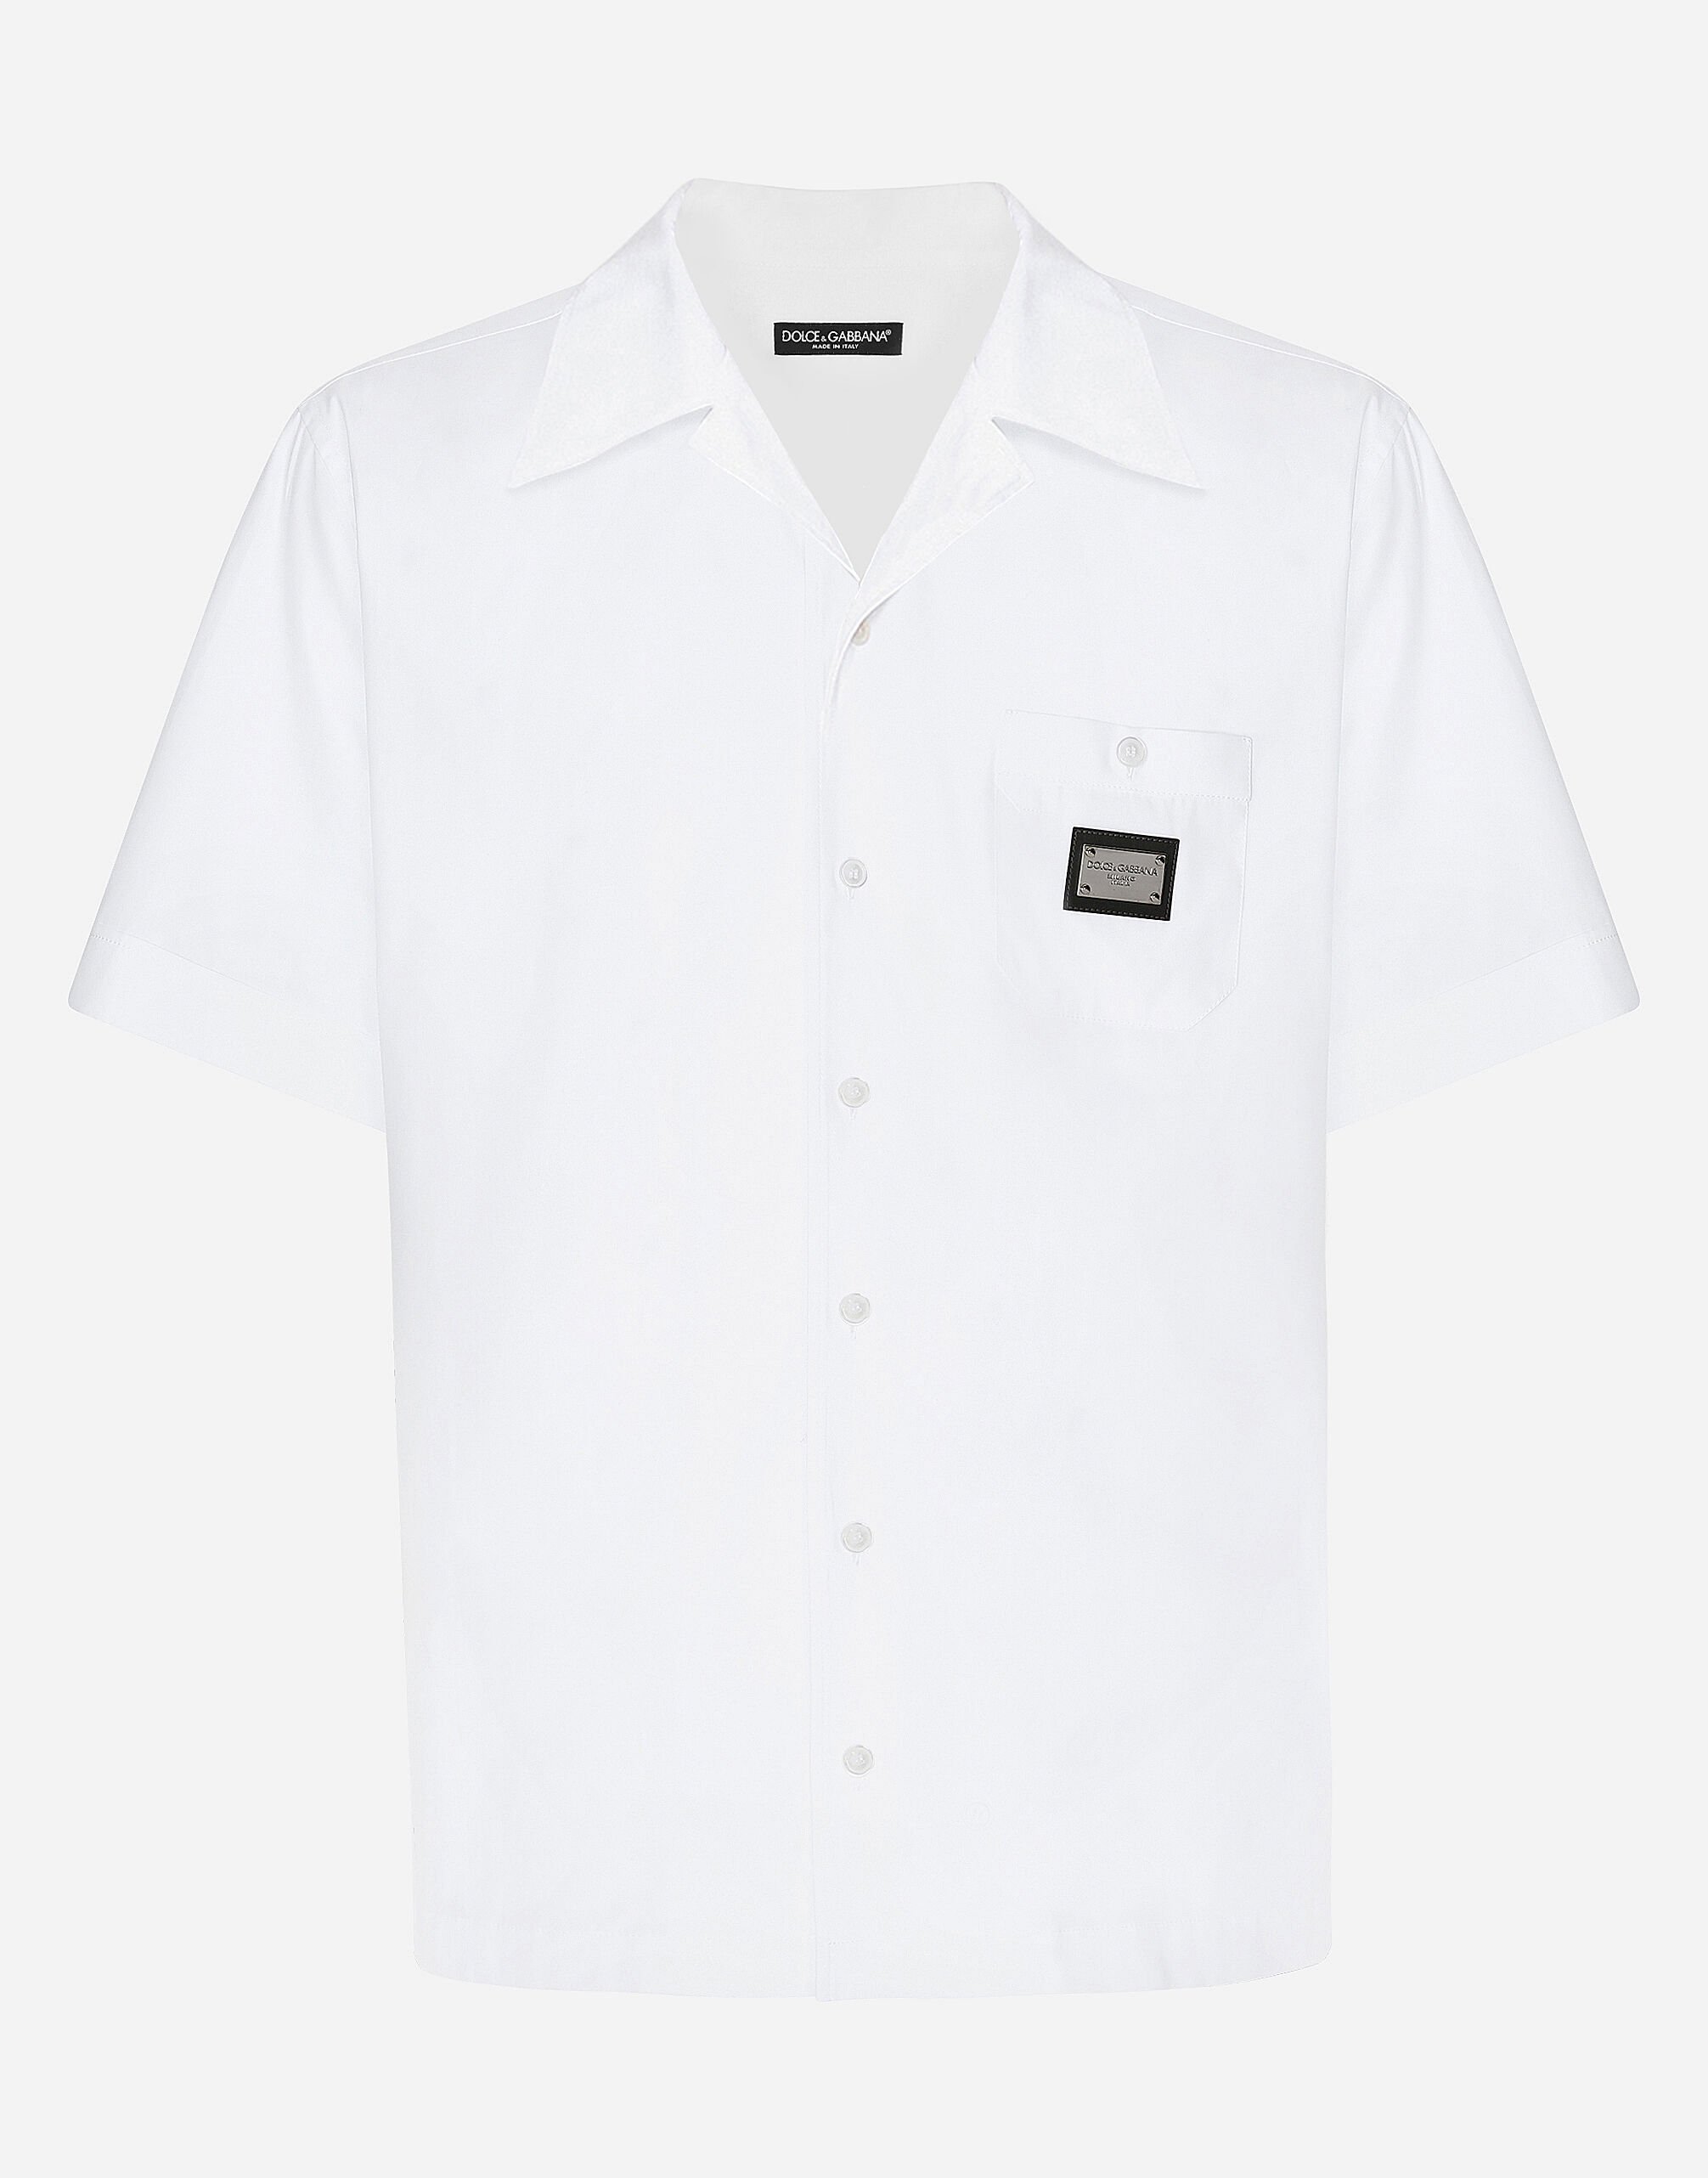 Dolce & Gabbana Cotton Hawaiian shirt with branded tag Print G5KB4TIS1SF